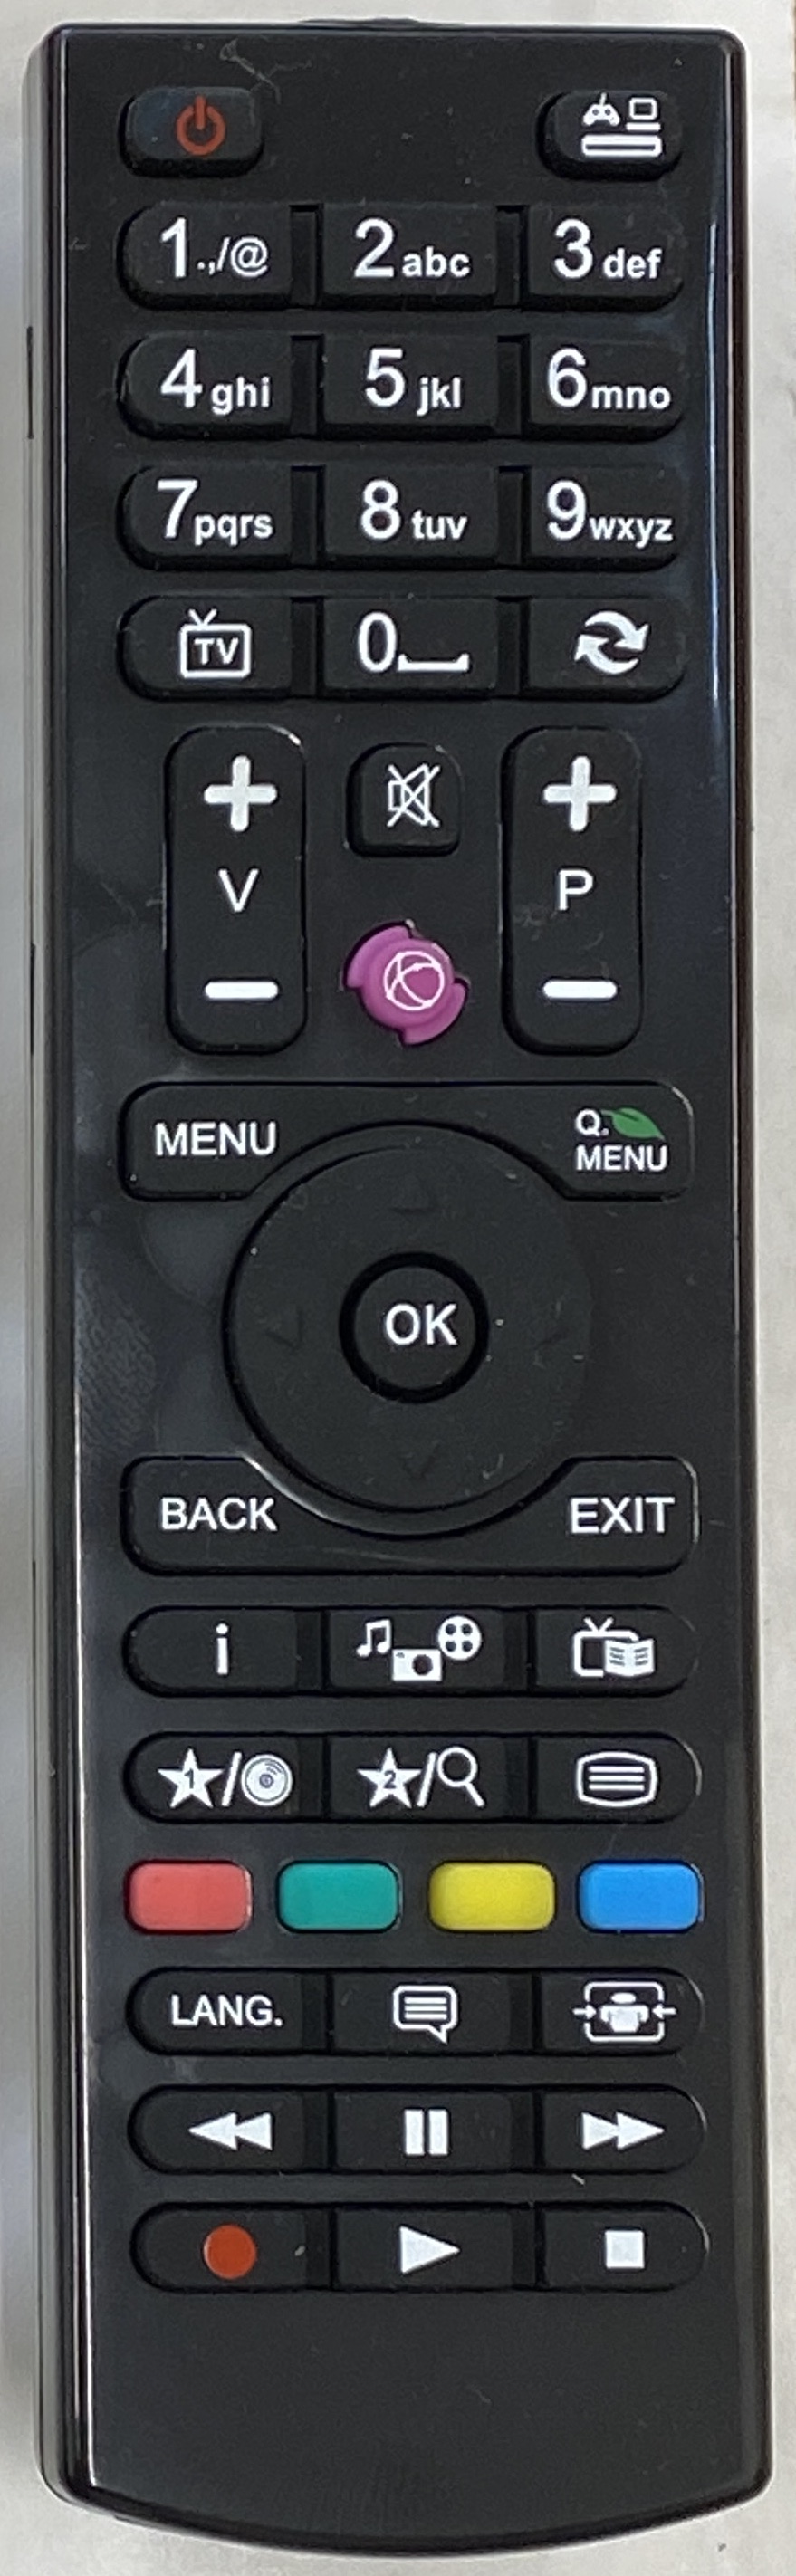 BUSH LED22982FHD Remote Control Original